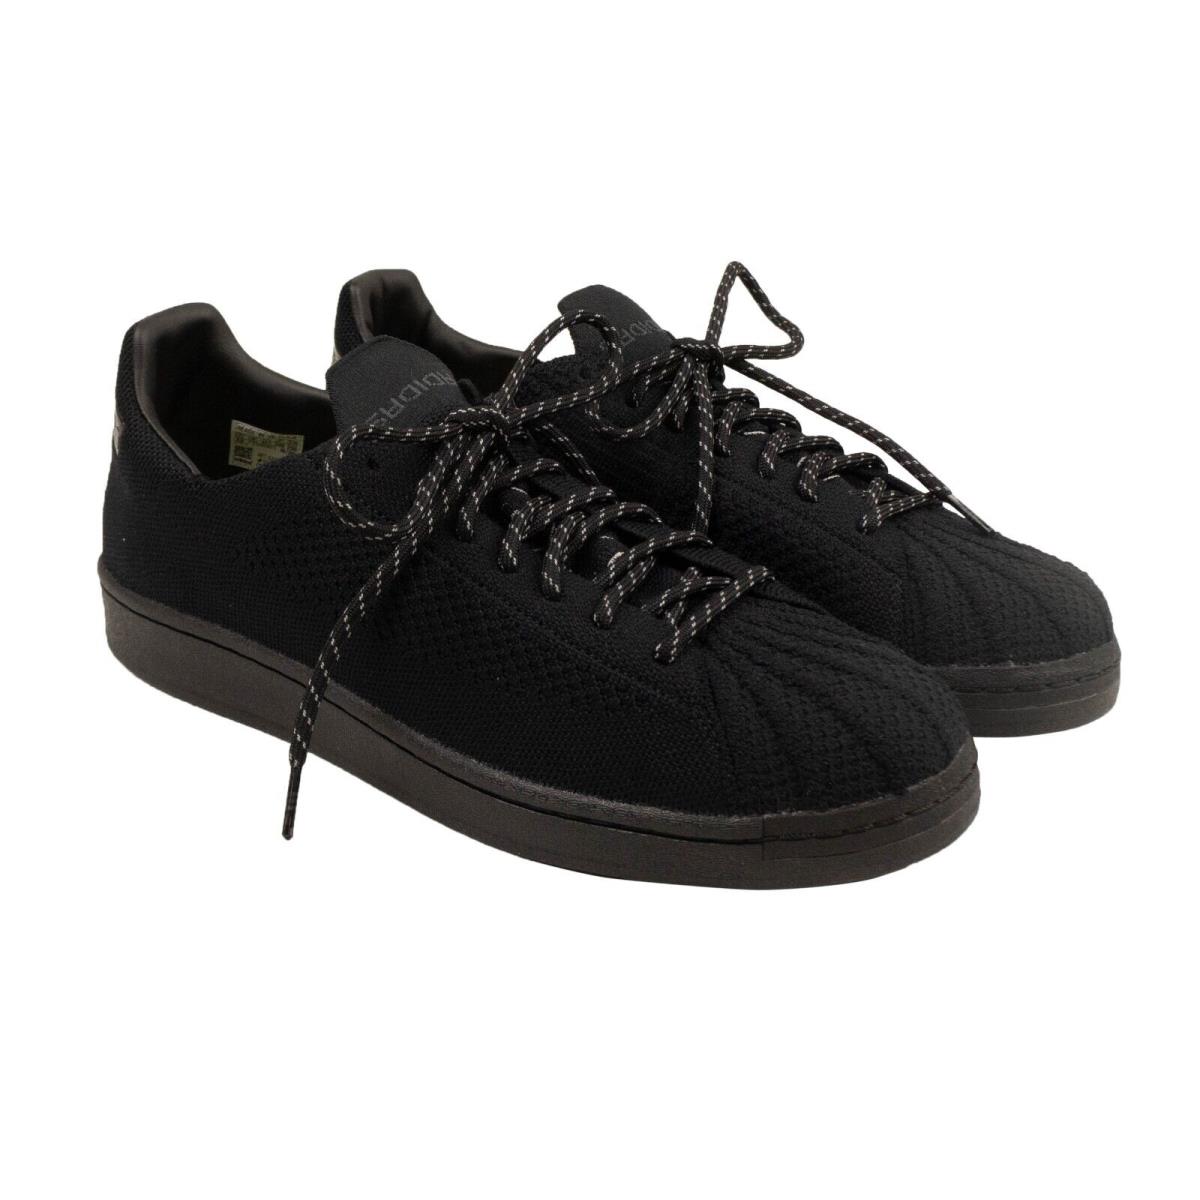 Adidas Black PW Superstar PK Sneakers Size 10.5/43.5 - Black